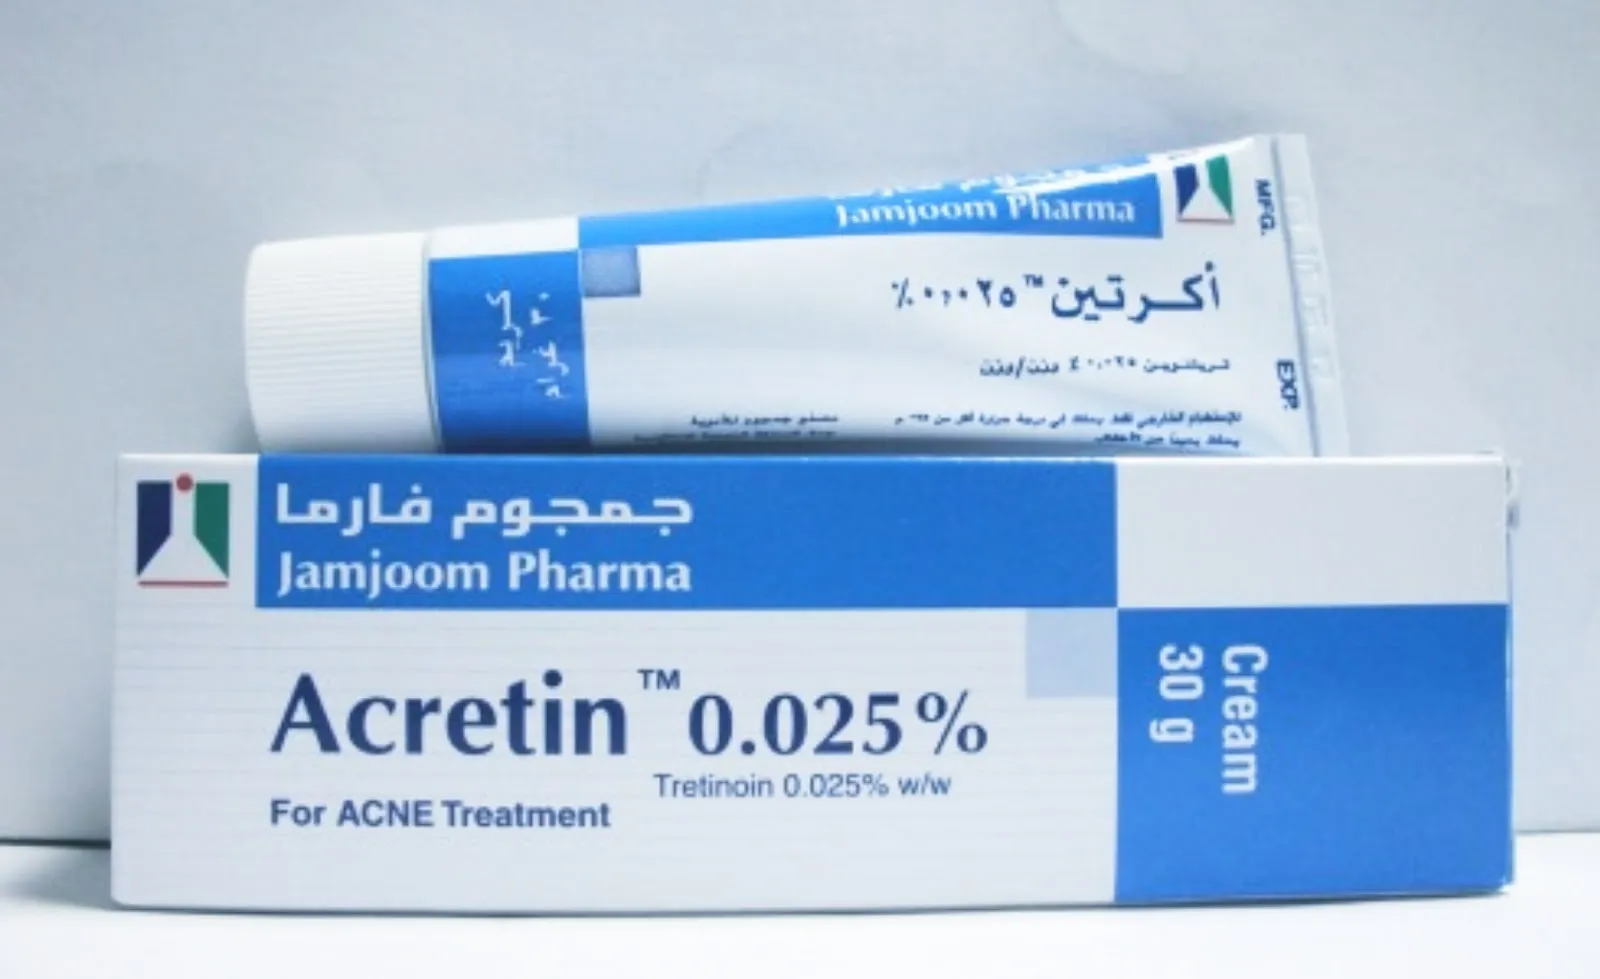 ما هو استخدام كريم اكرتين Acretin